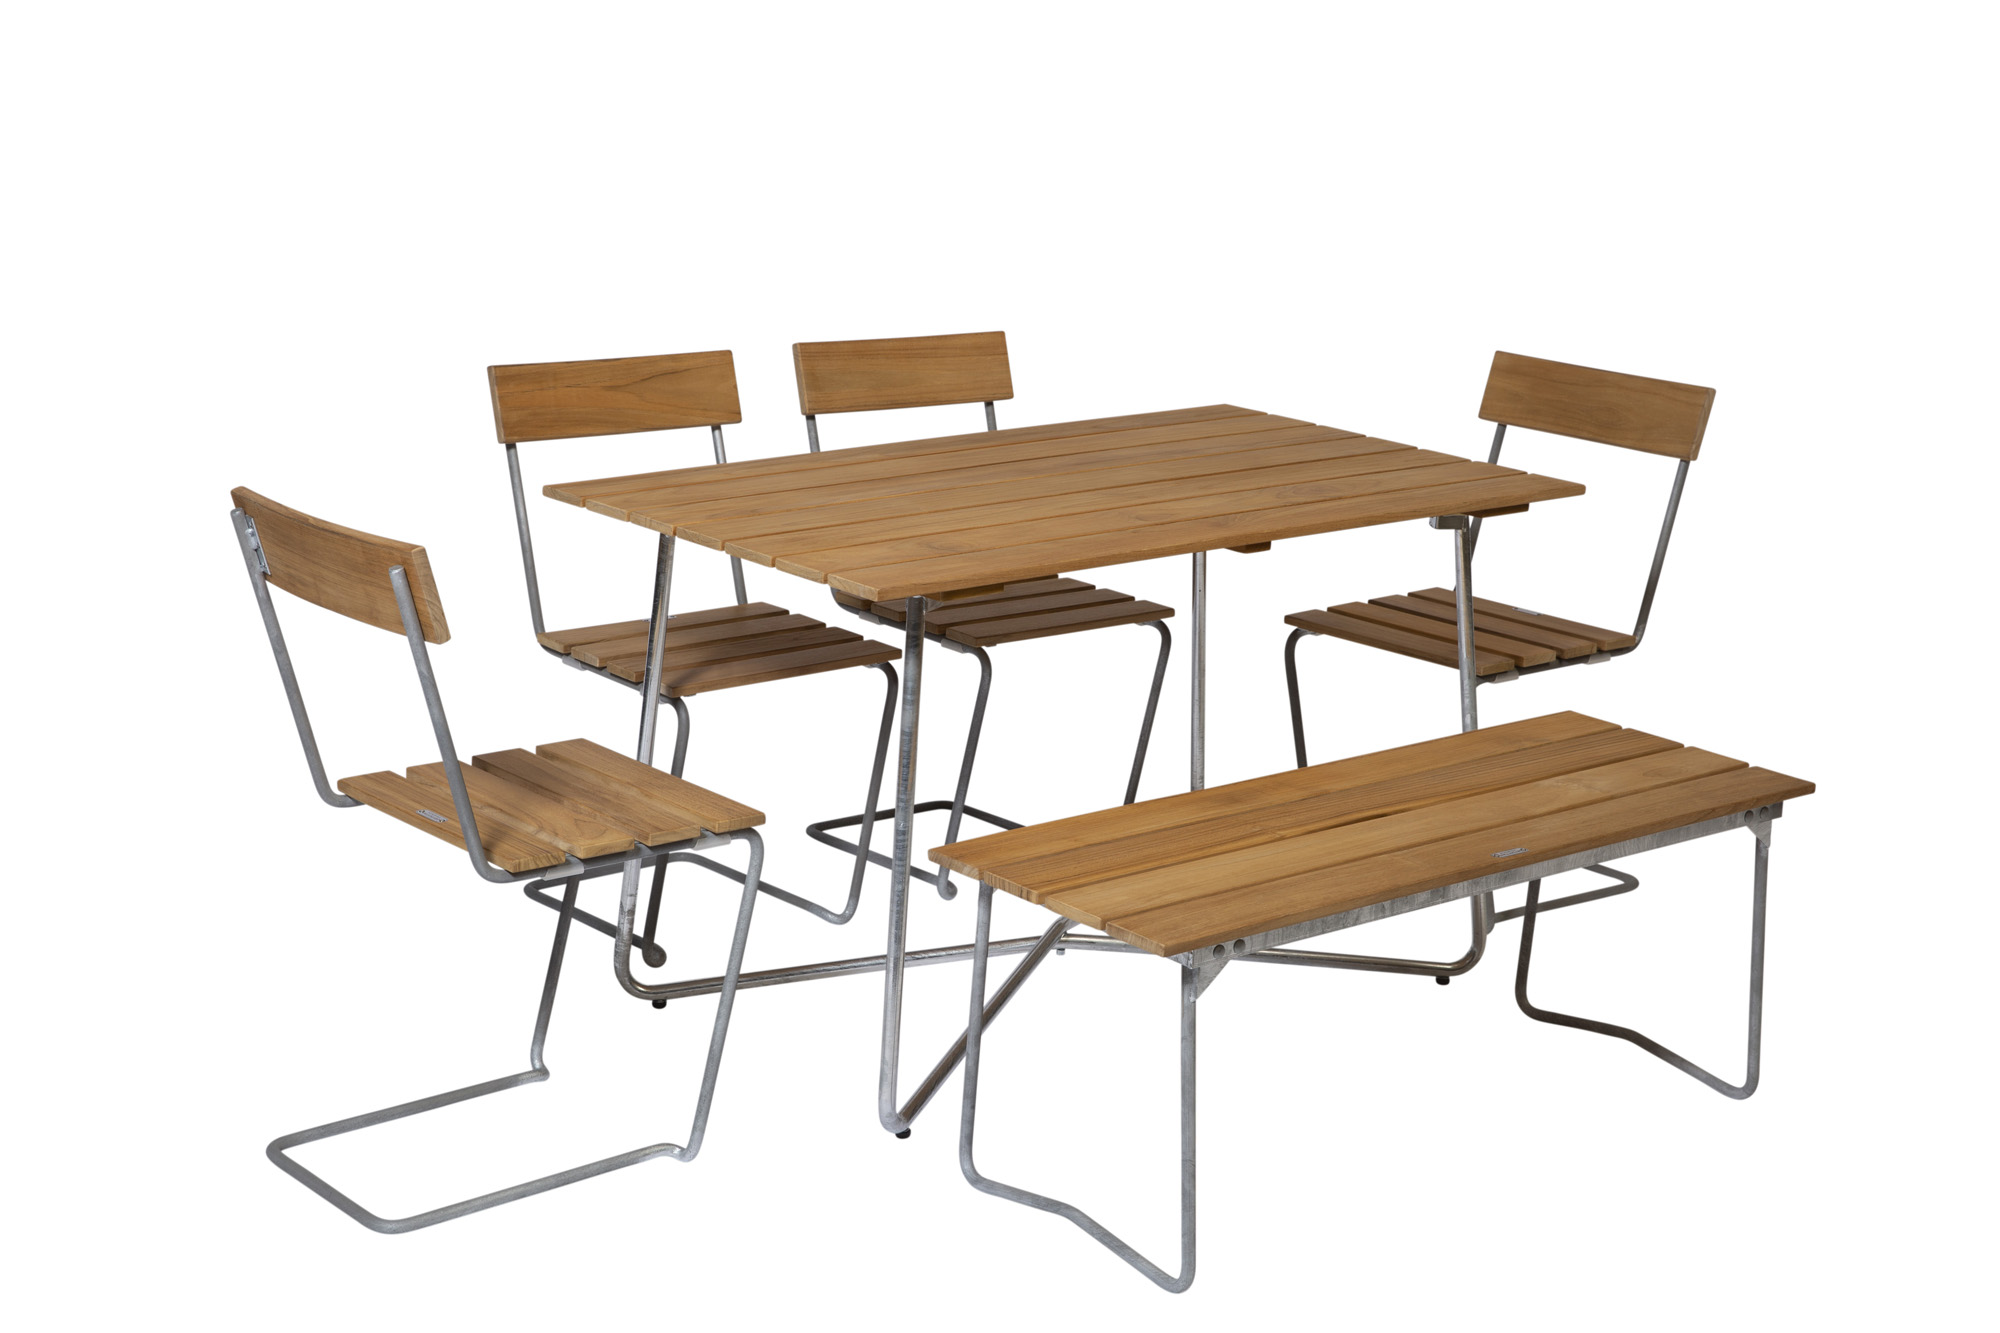 Grythyttan Stålmöbler B25 spisebordsæt Teak/galvaniseret stål 4 stole, bænk 110 cm & bord 120 x 70 cm